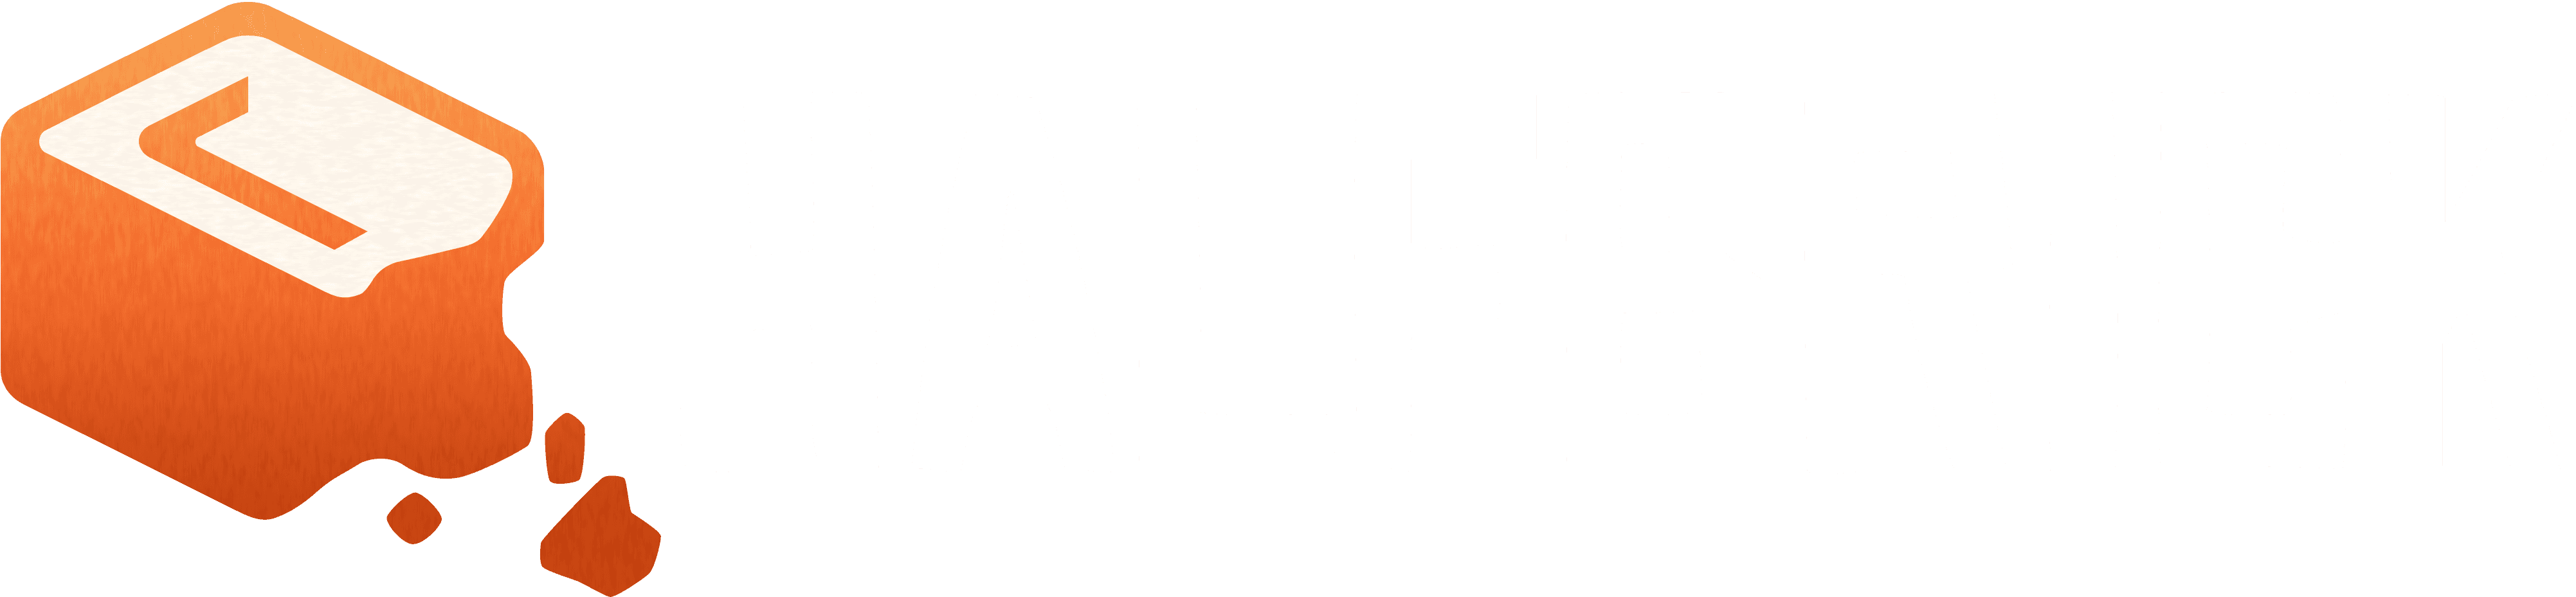 Halfbrick Logo - Newsletter - Halfbrick Studios